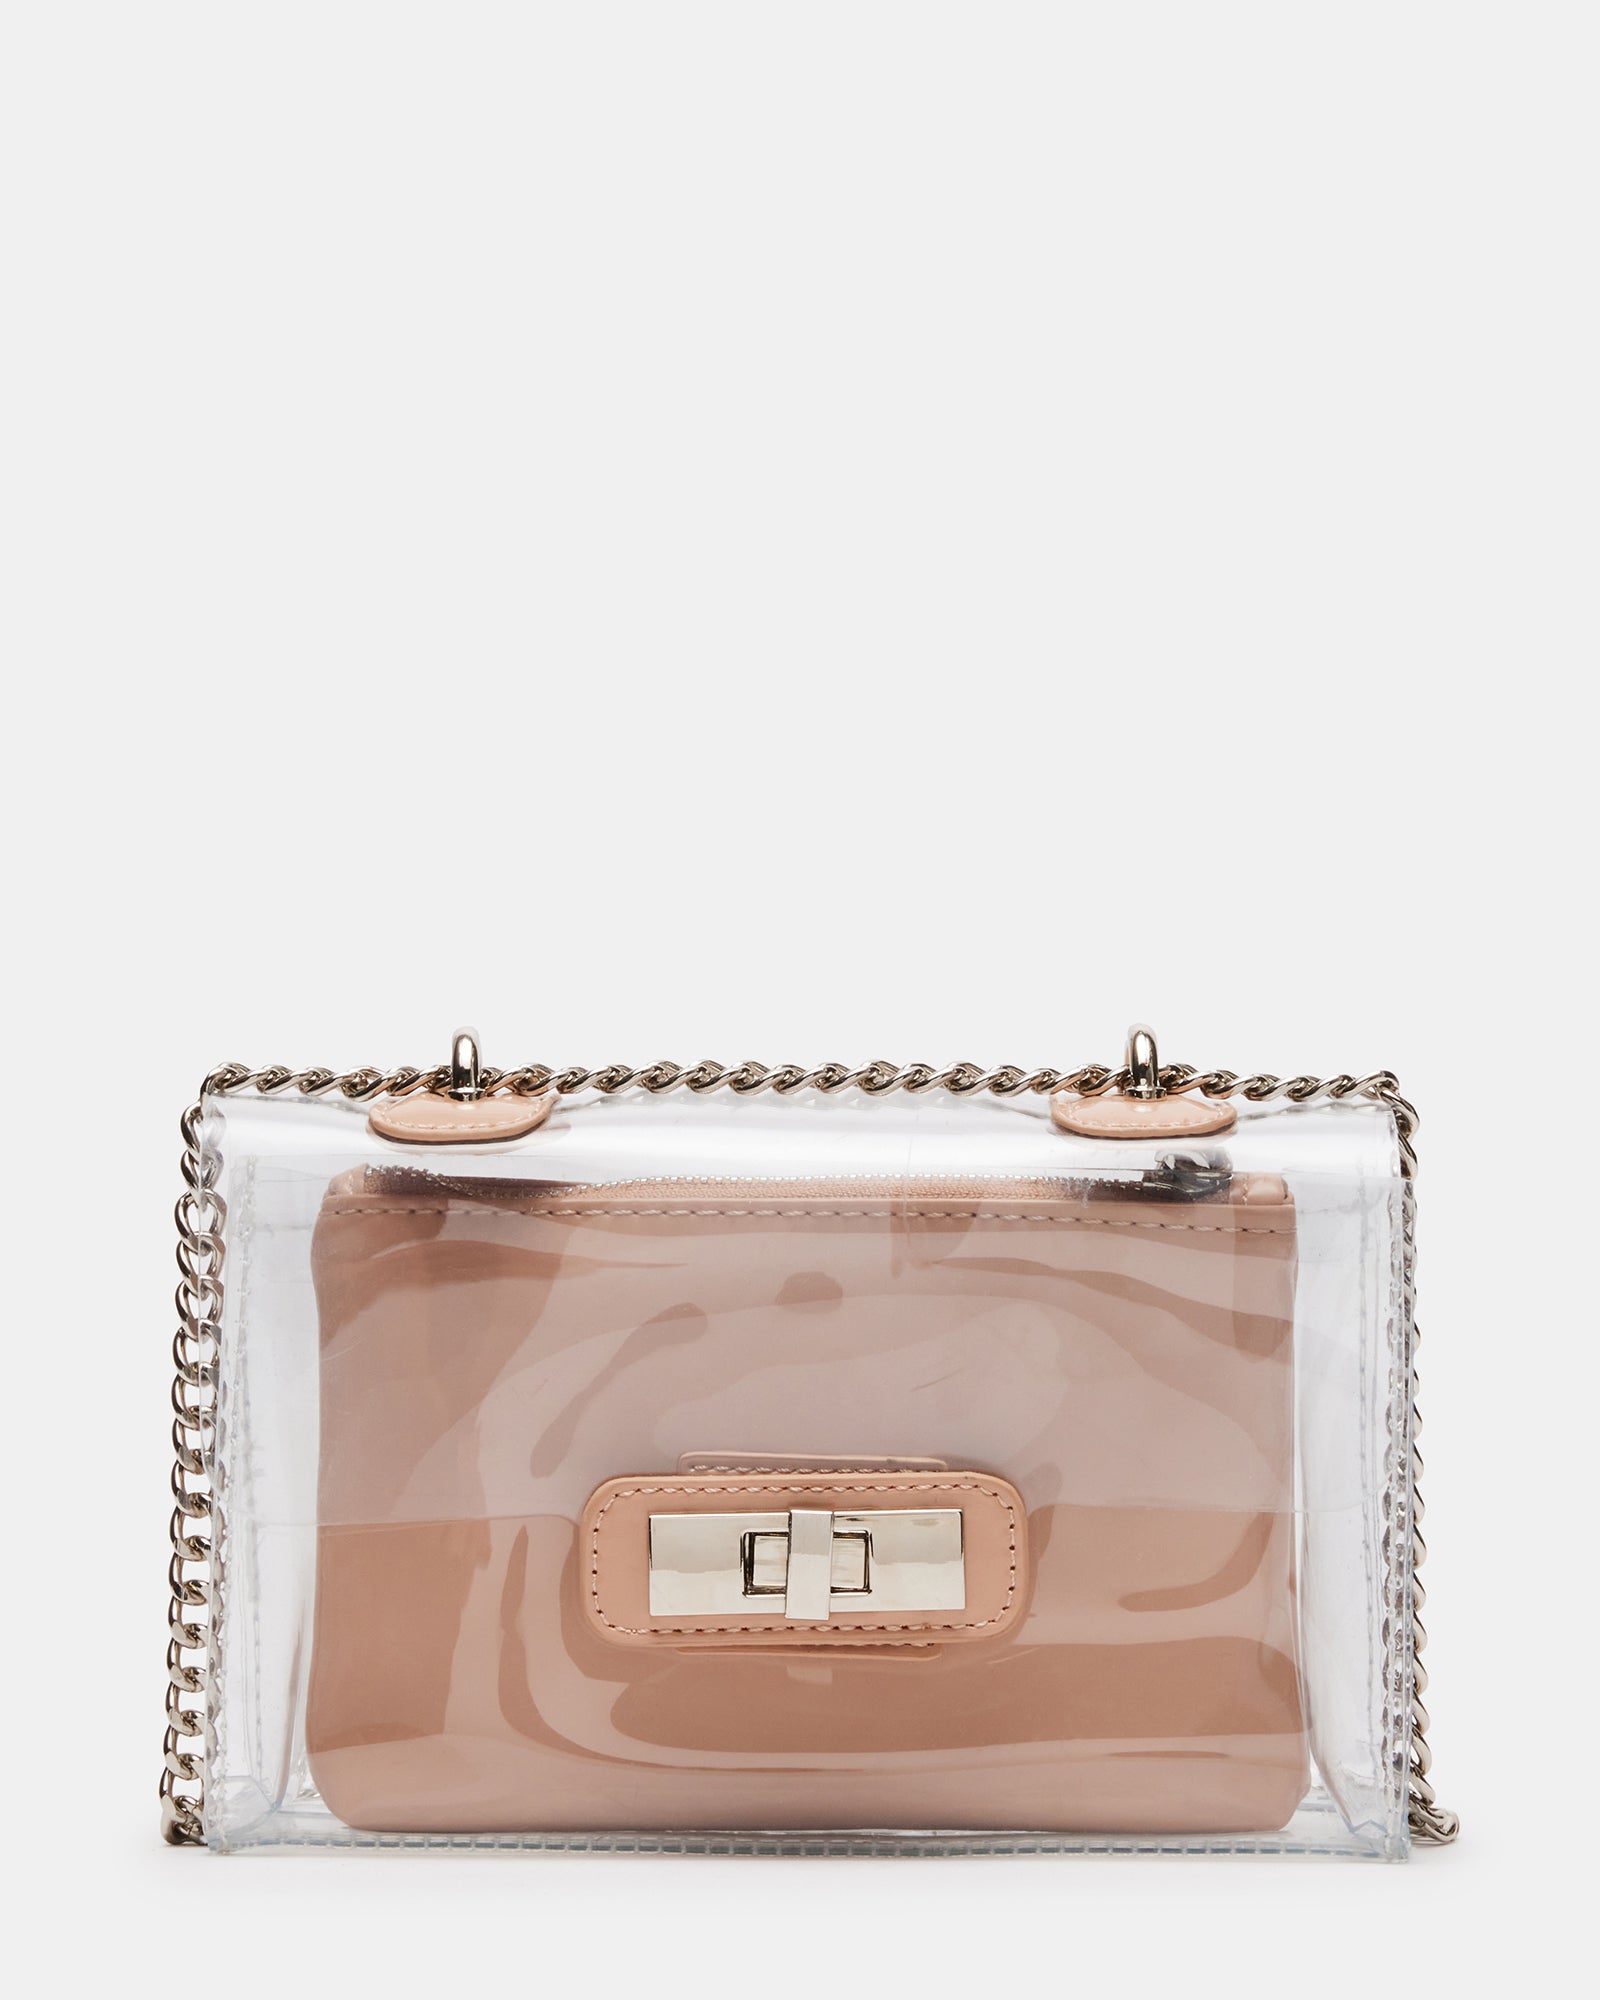 designer clear handbags for work